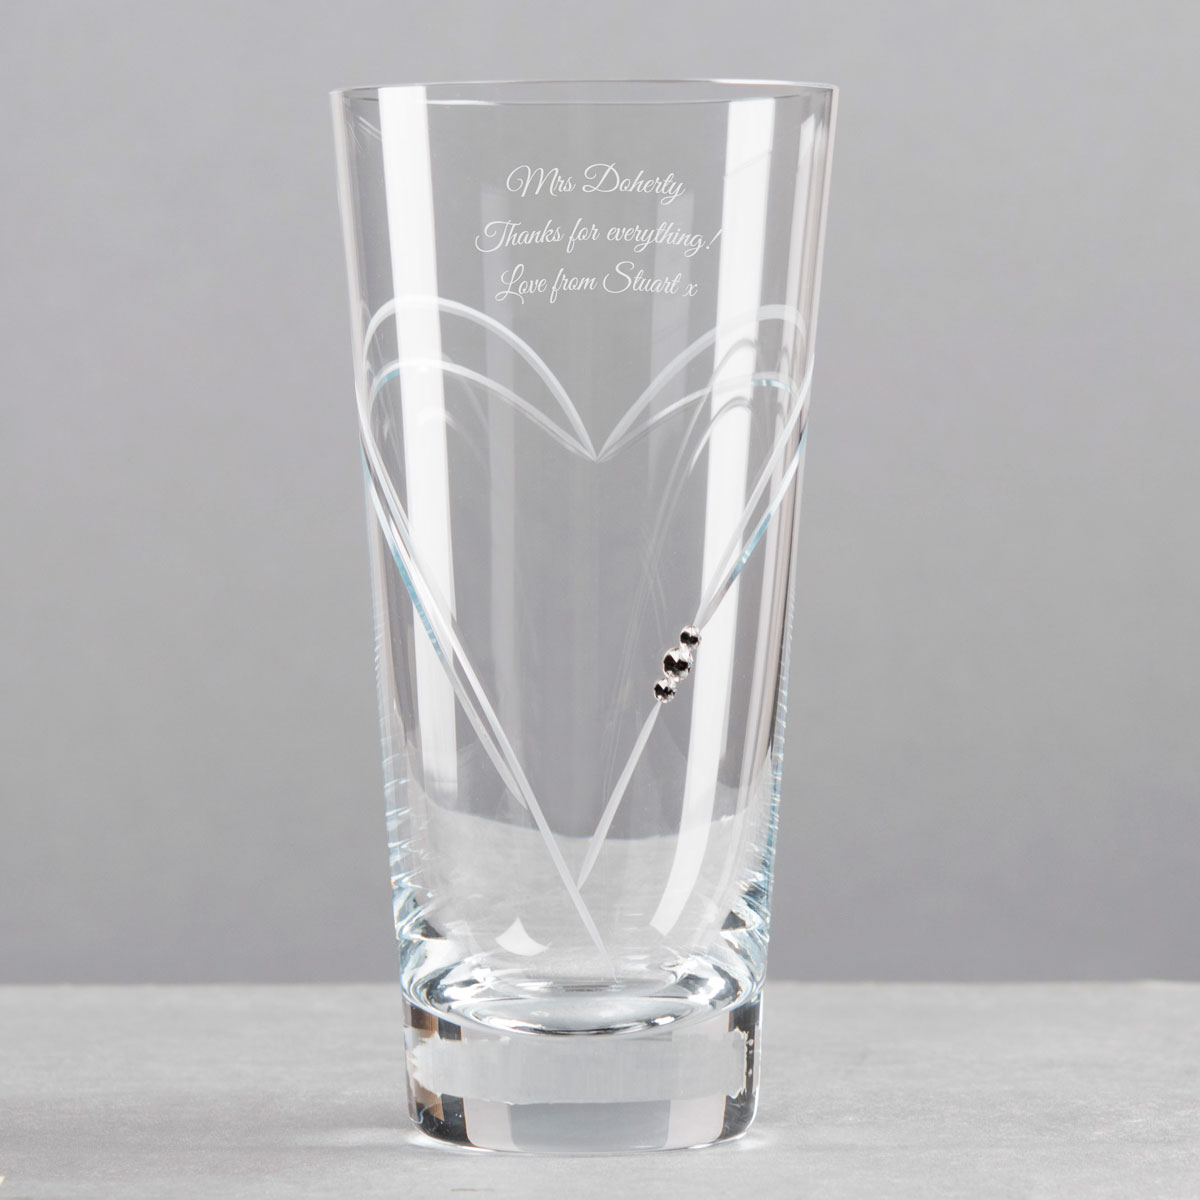 Engraved Swarovski Elements Glass Vase - Thanks Teacher